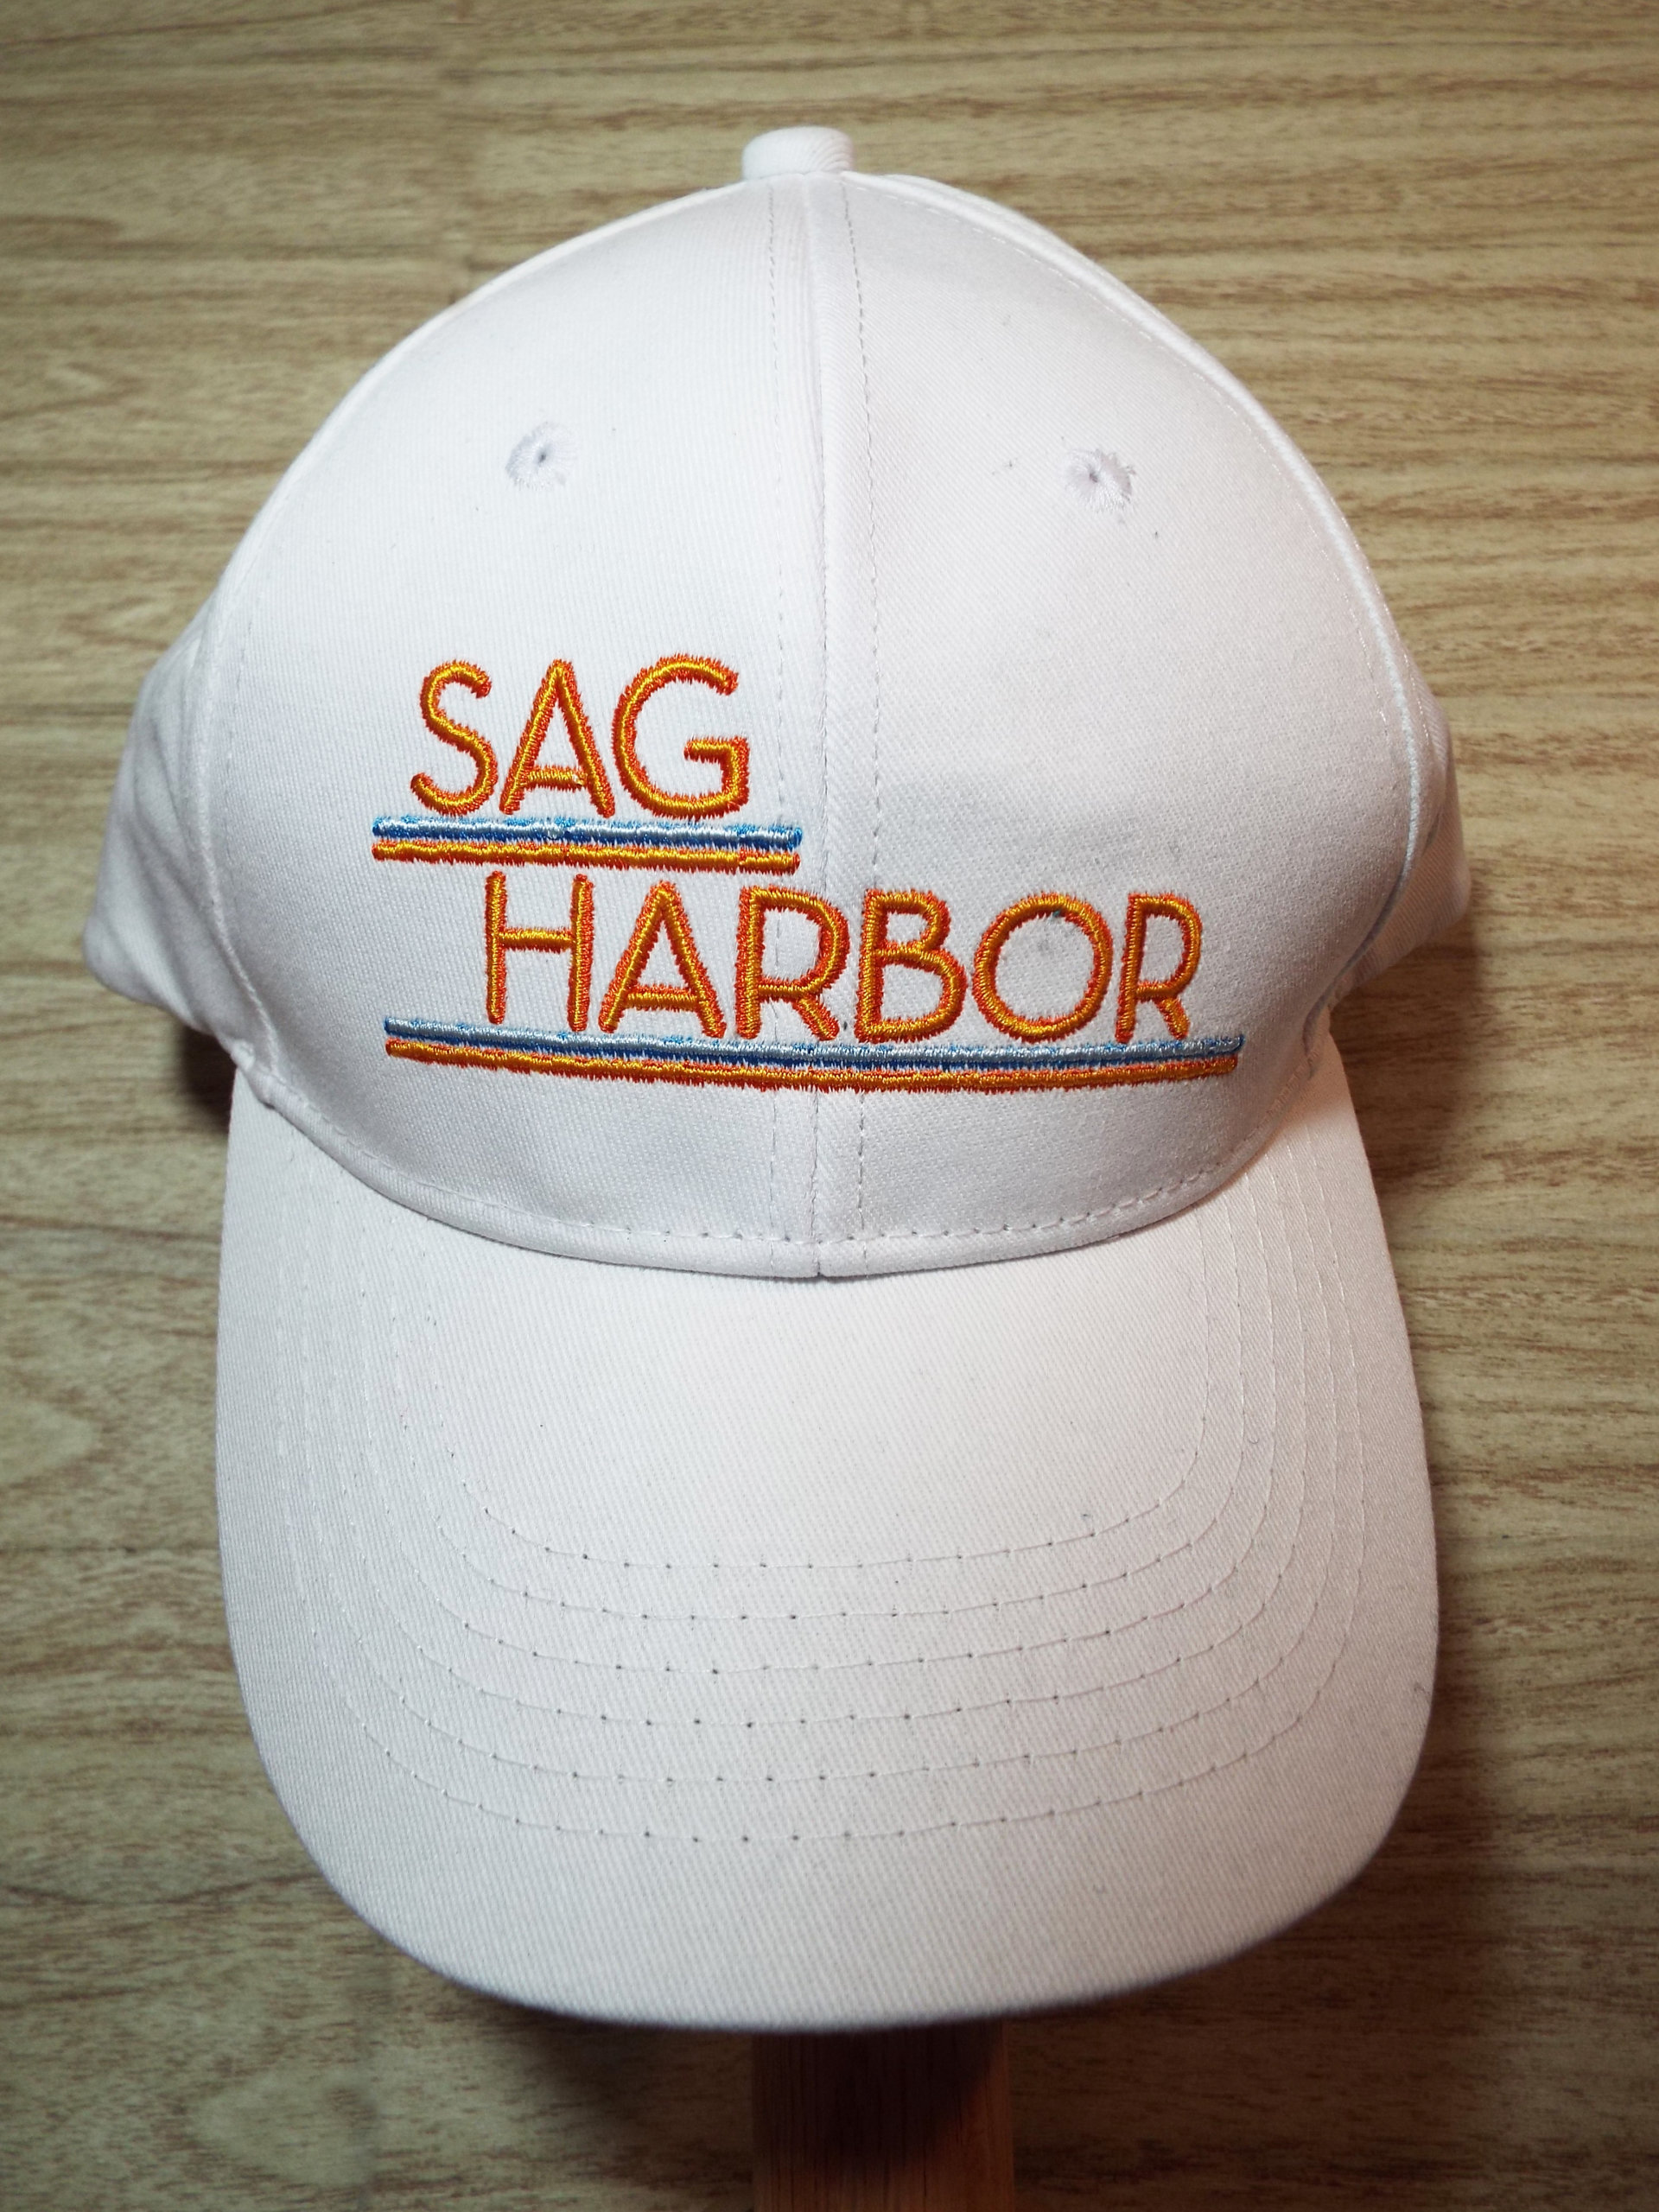 The white Sag Harbor Cinema baseball cap